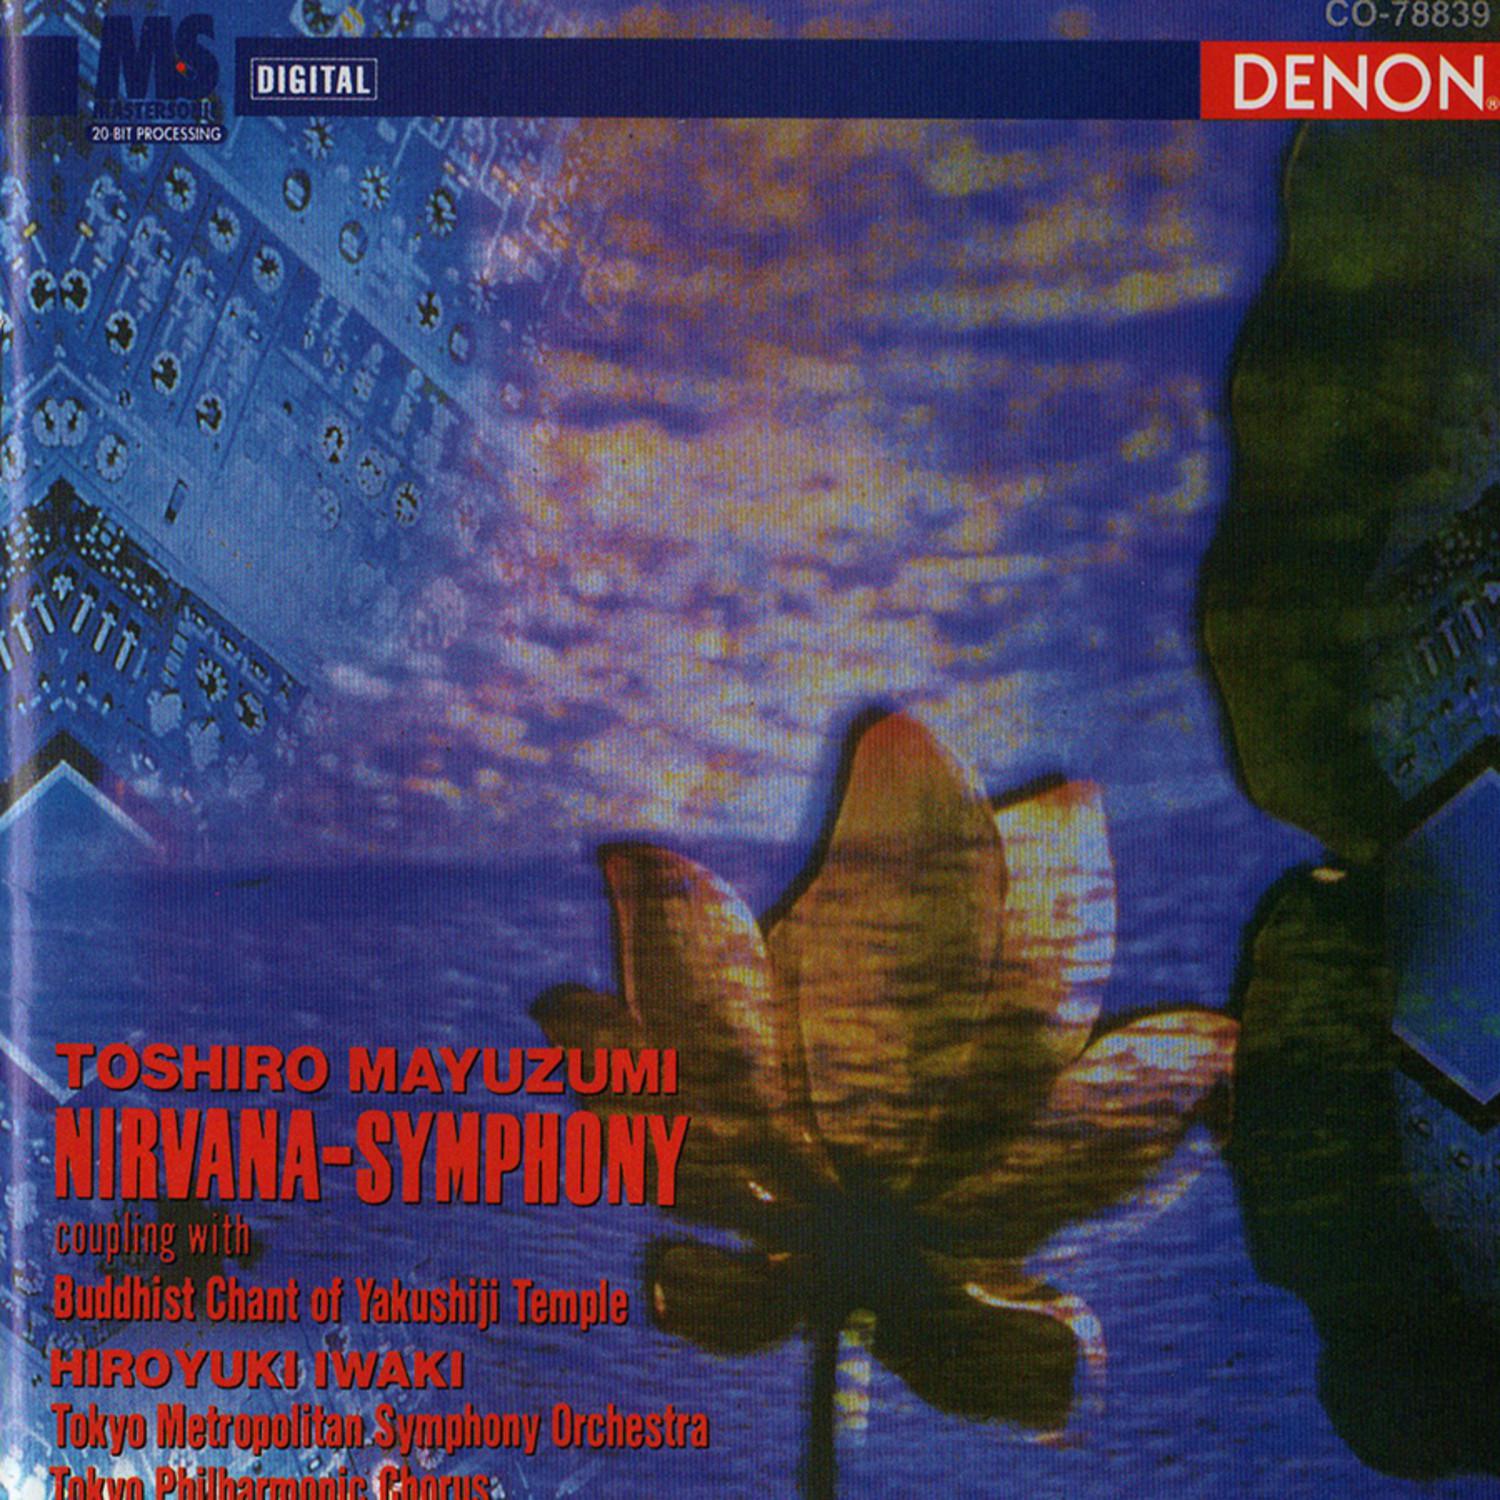 Nirvana-Symphony: II. Suramgamah